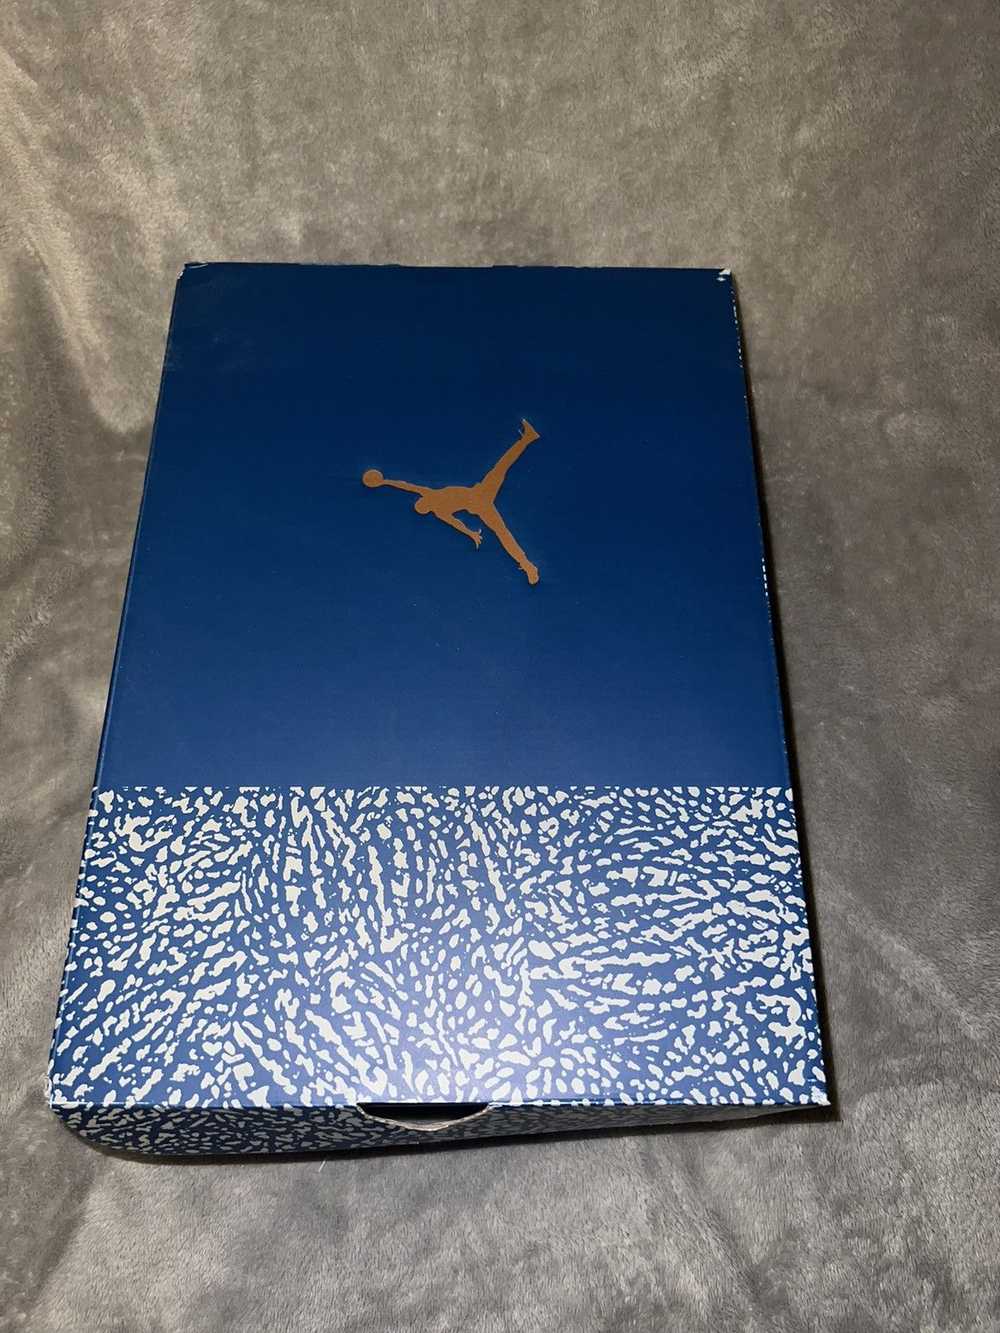 Jordan Brand × Nike Jordan 3 “Wizards” - image 11